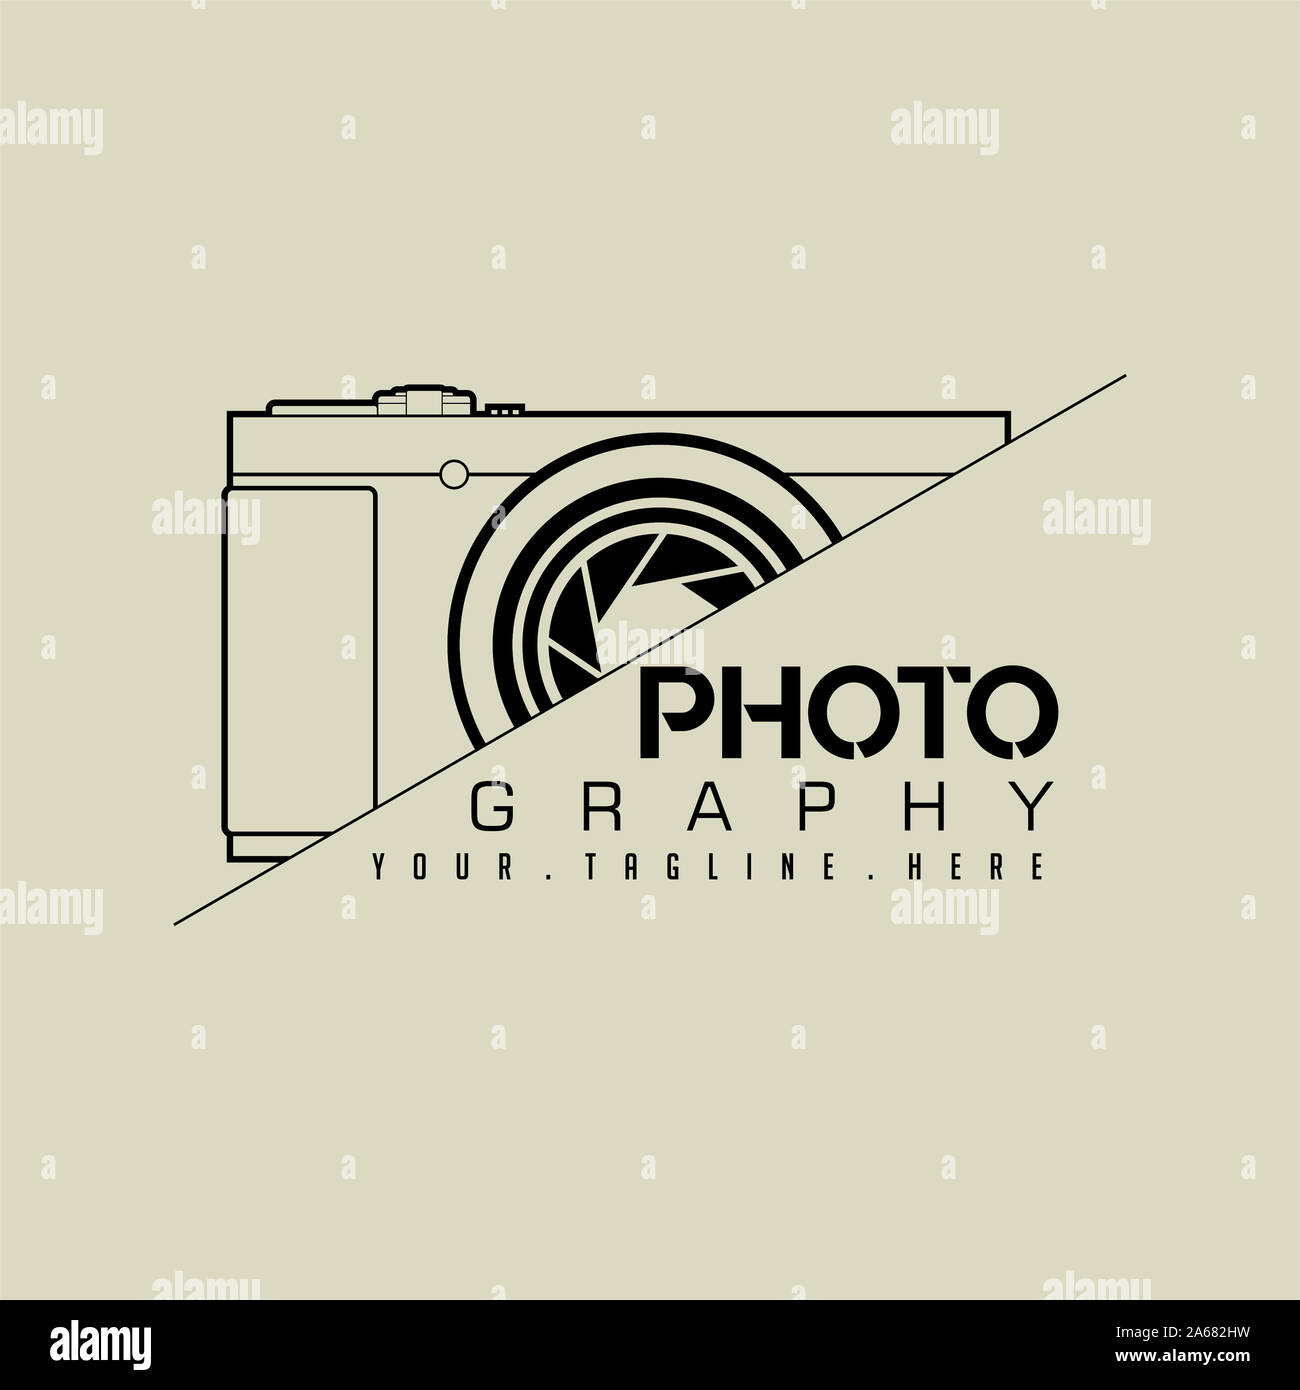 Pocket Camera Photography Line art logo icon vector Stock Photo